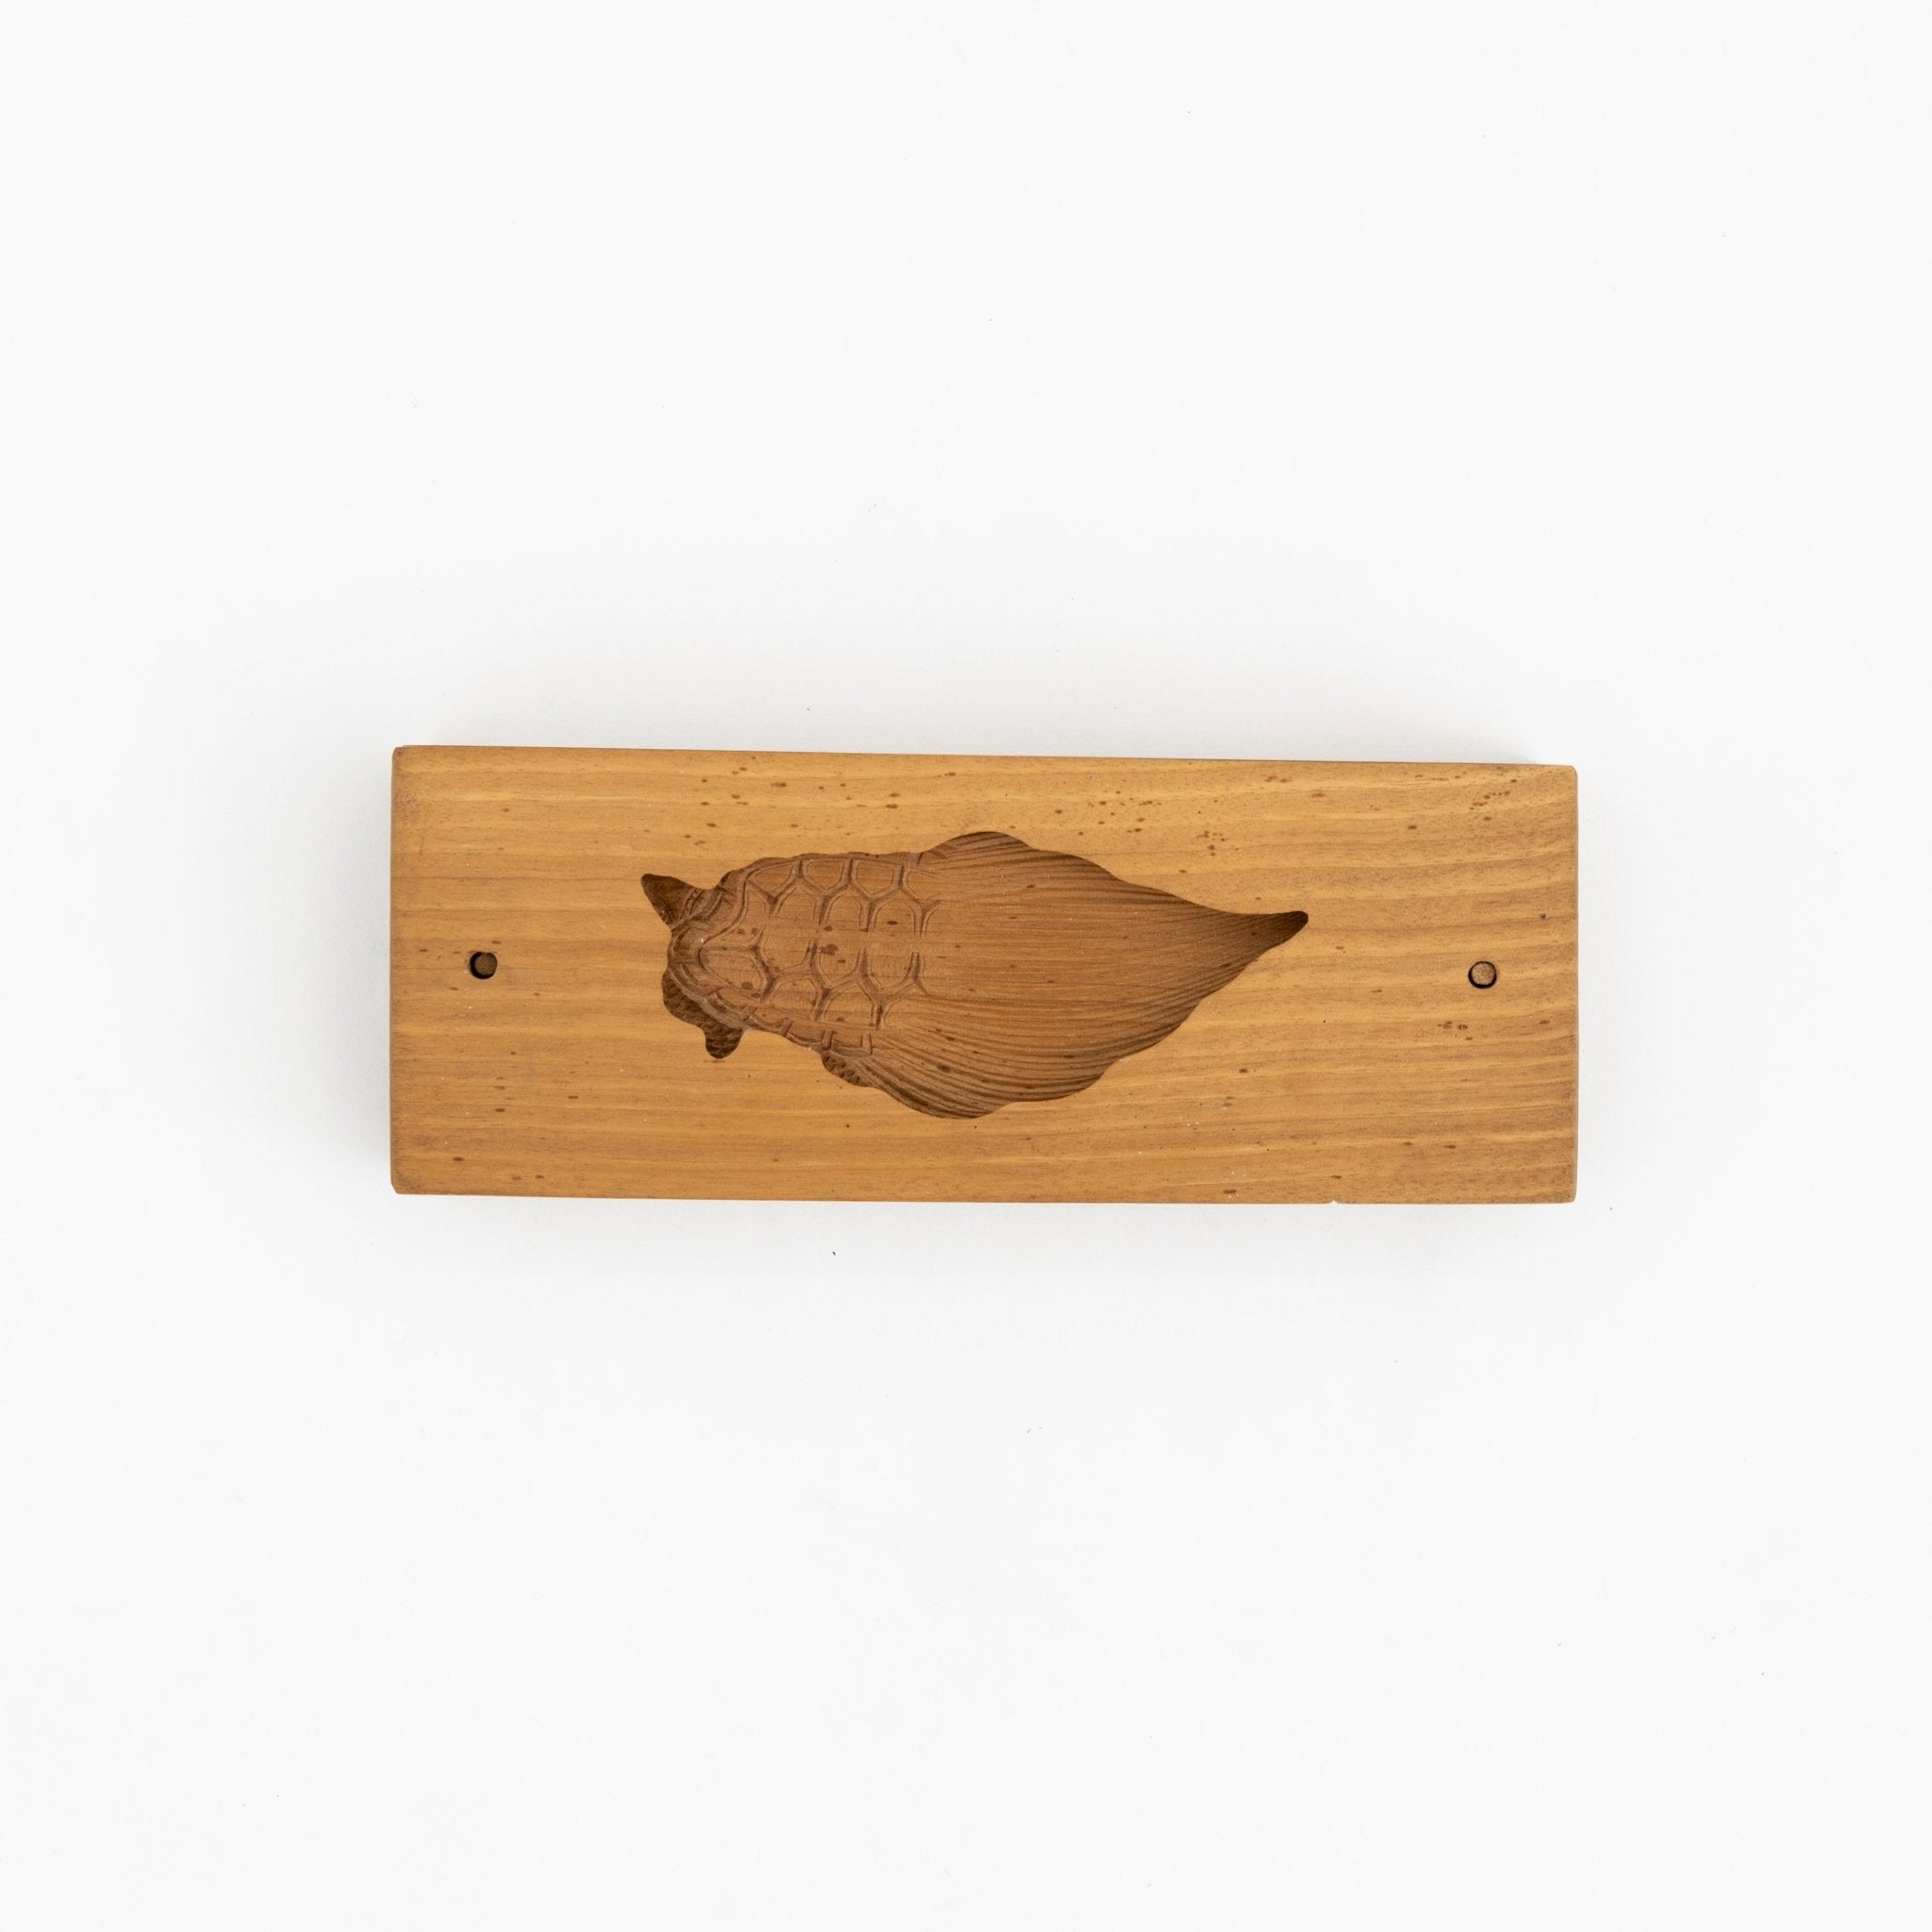 074 Unknown, Japan Wood Object